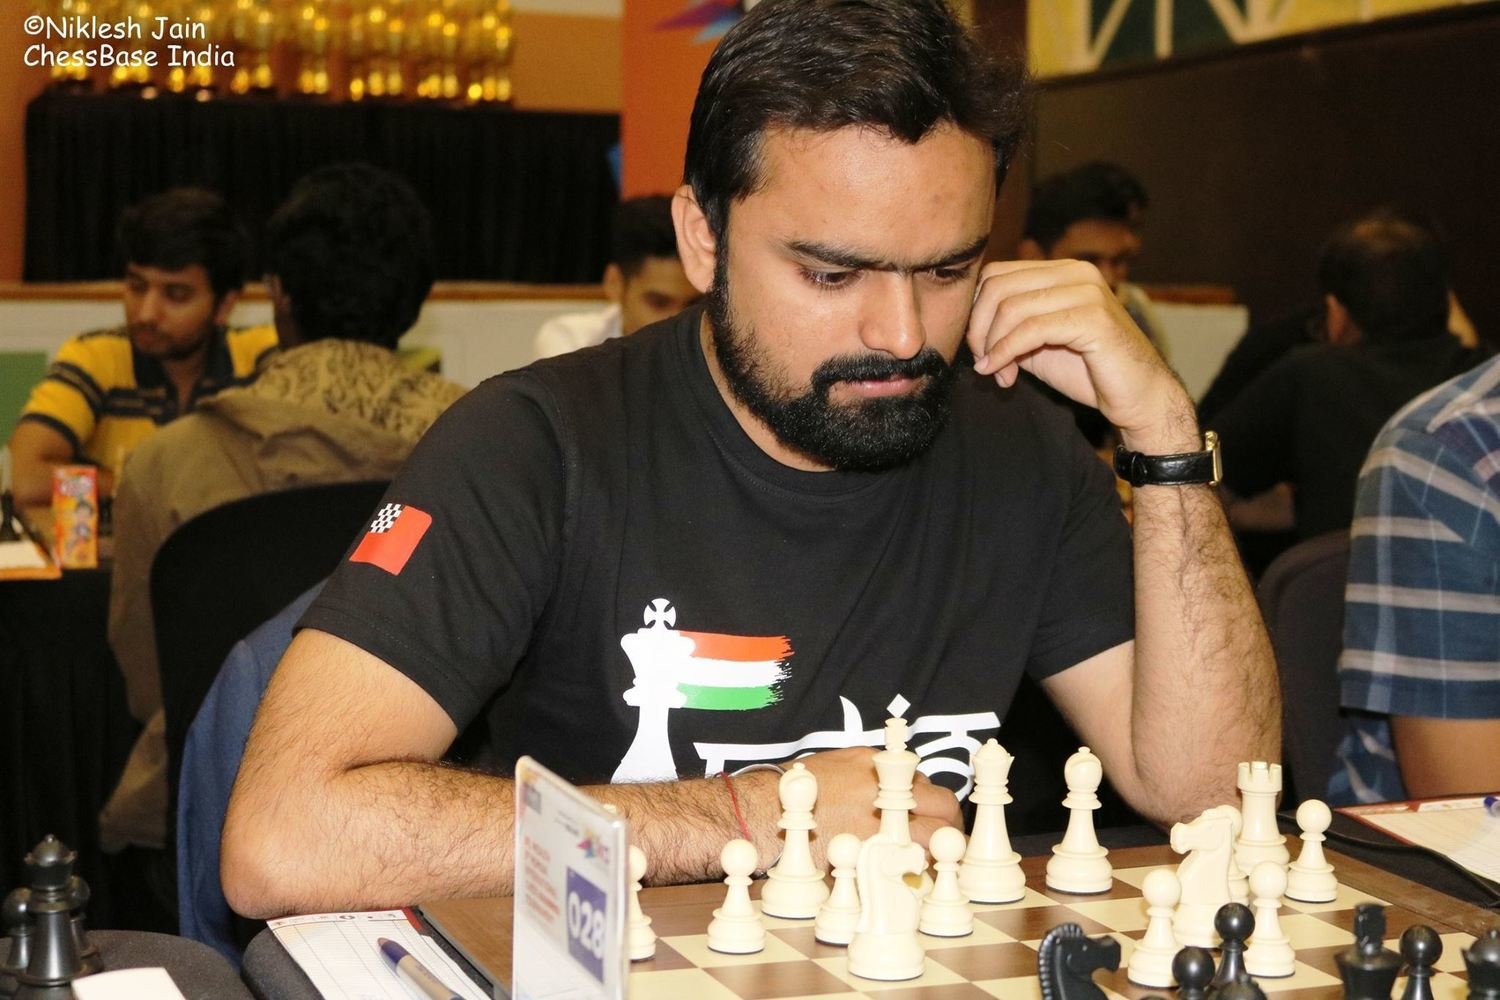 chessbase india t shirt